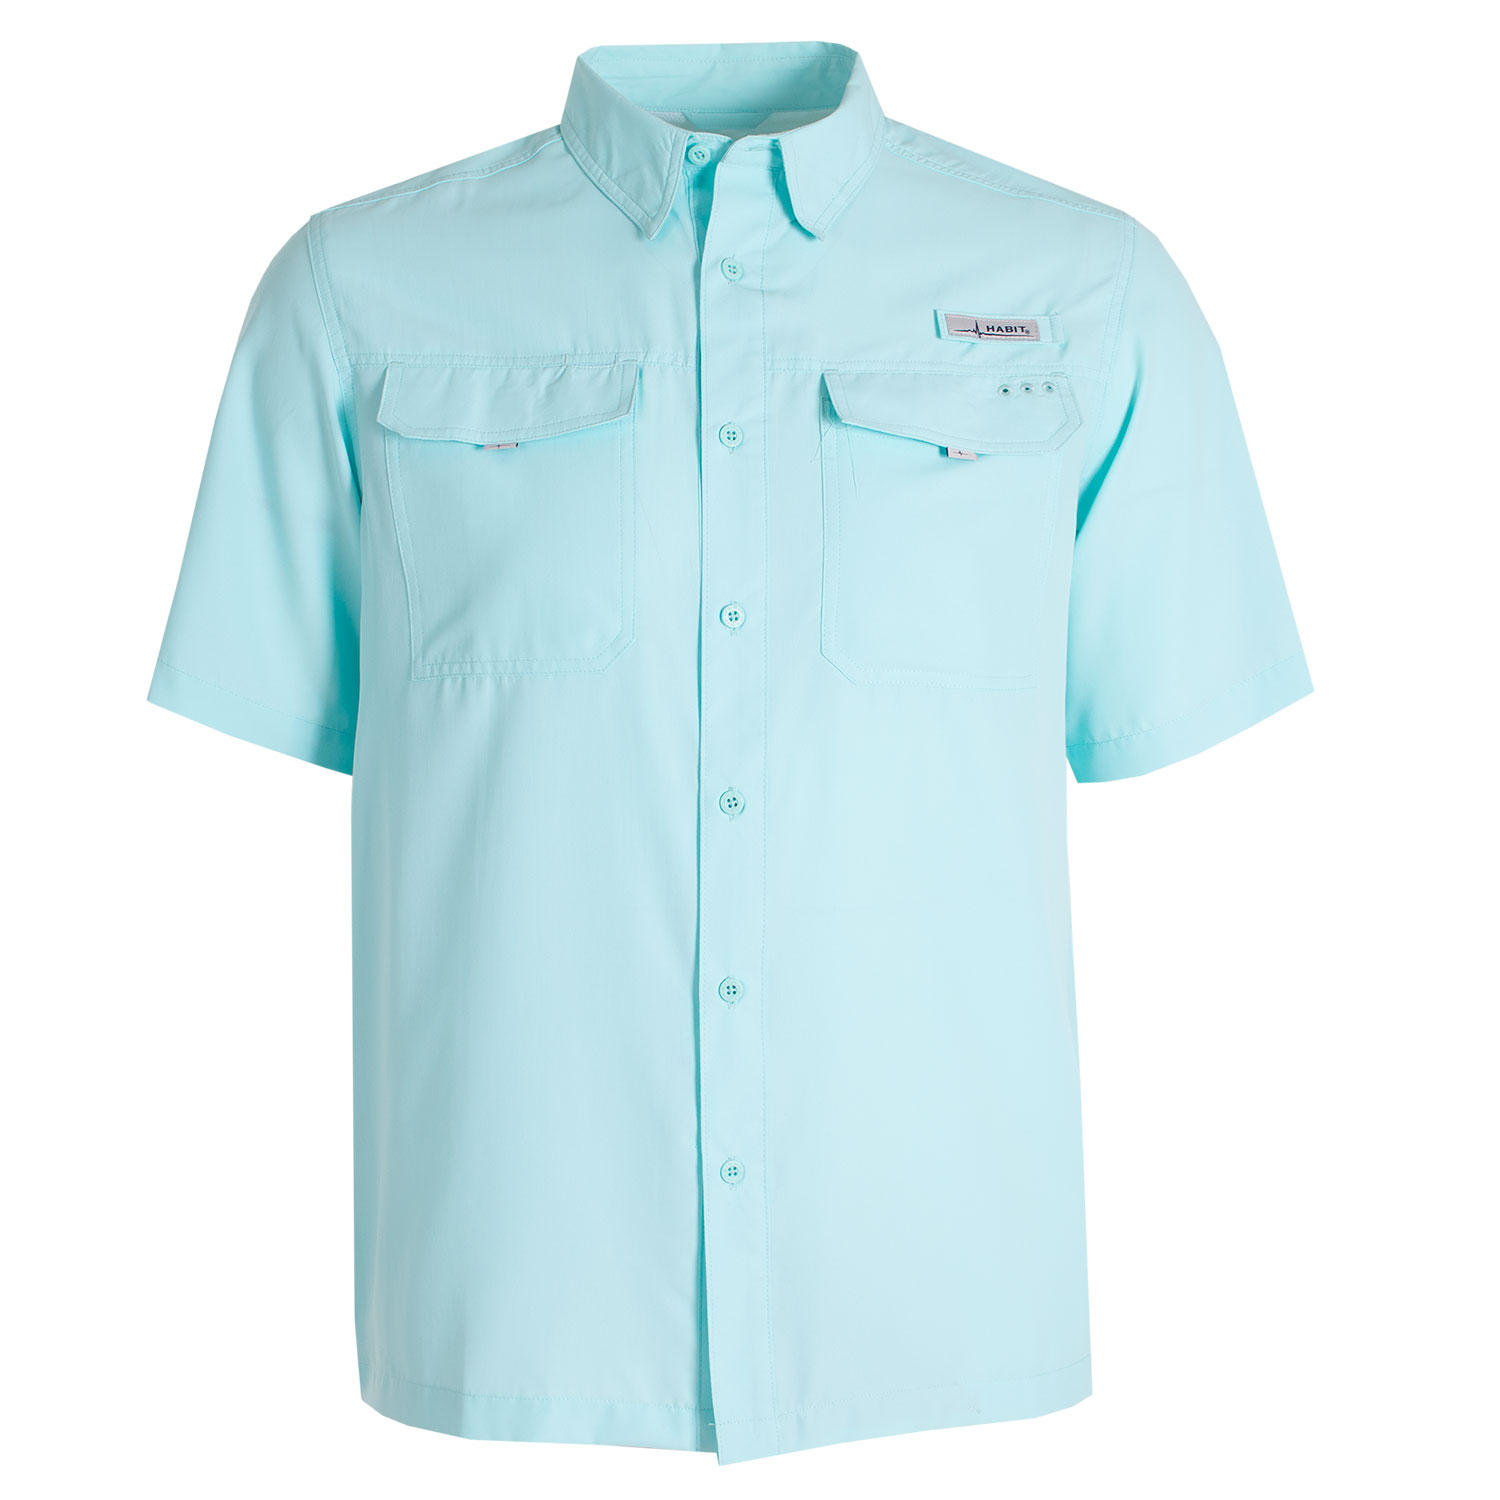 Habit Men's UPF 40+ UV Protection Short-Sleeve Fishing Shirt - Limpet Shell M